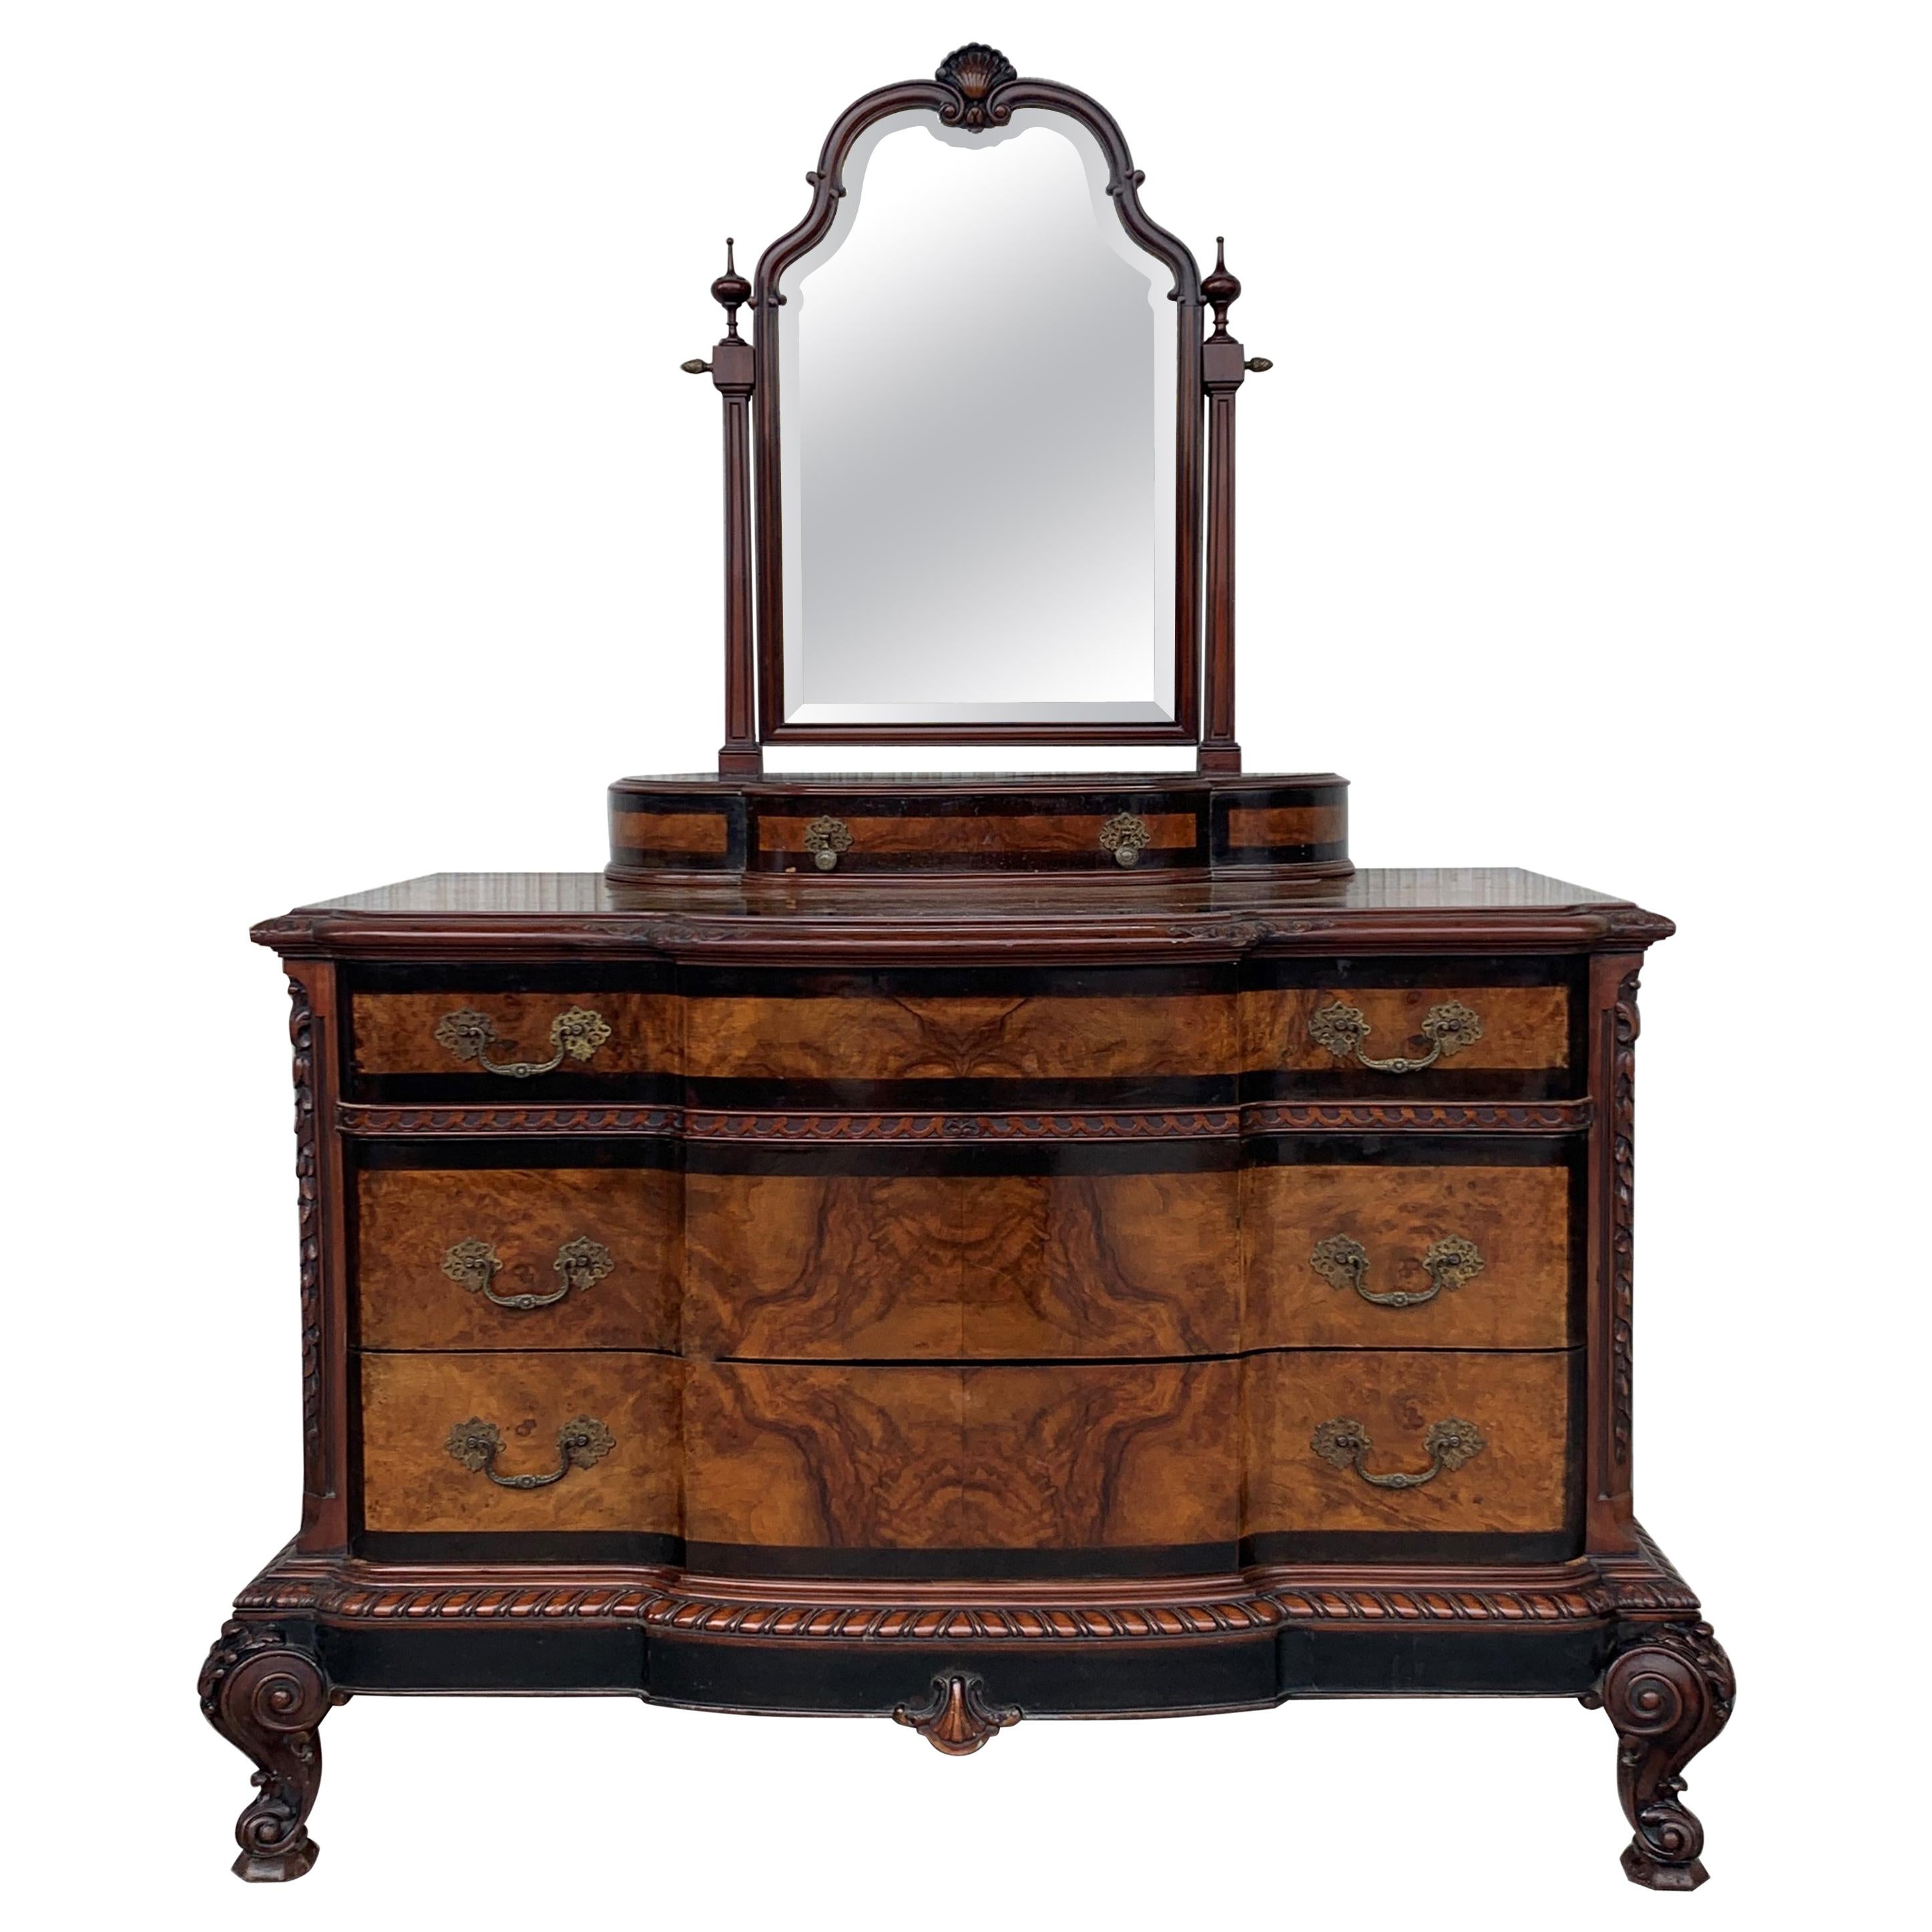 1900s Venetian Baroque Dresser with mirror in Burl Walnut with Ebonized Details